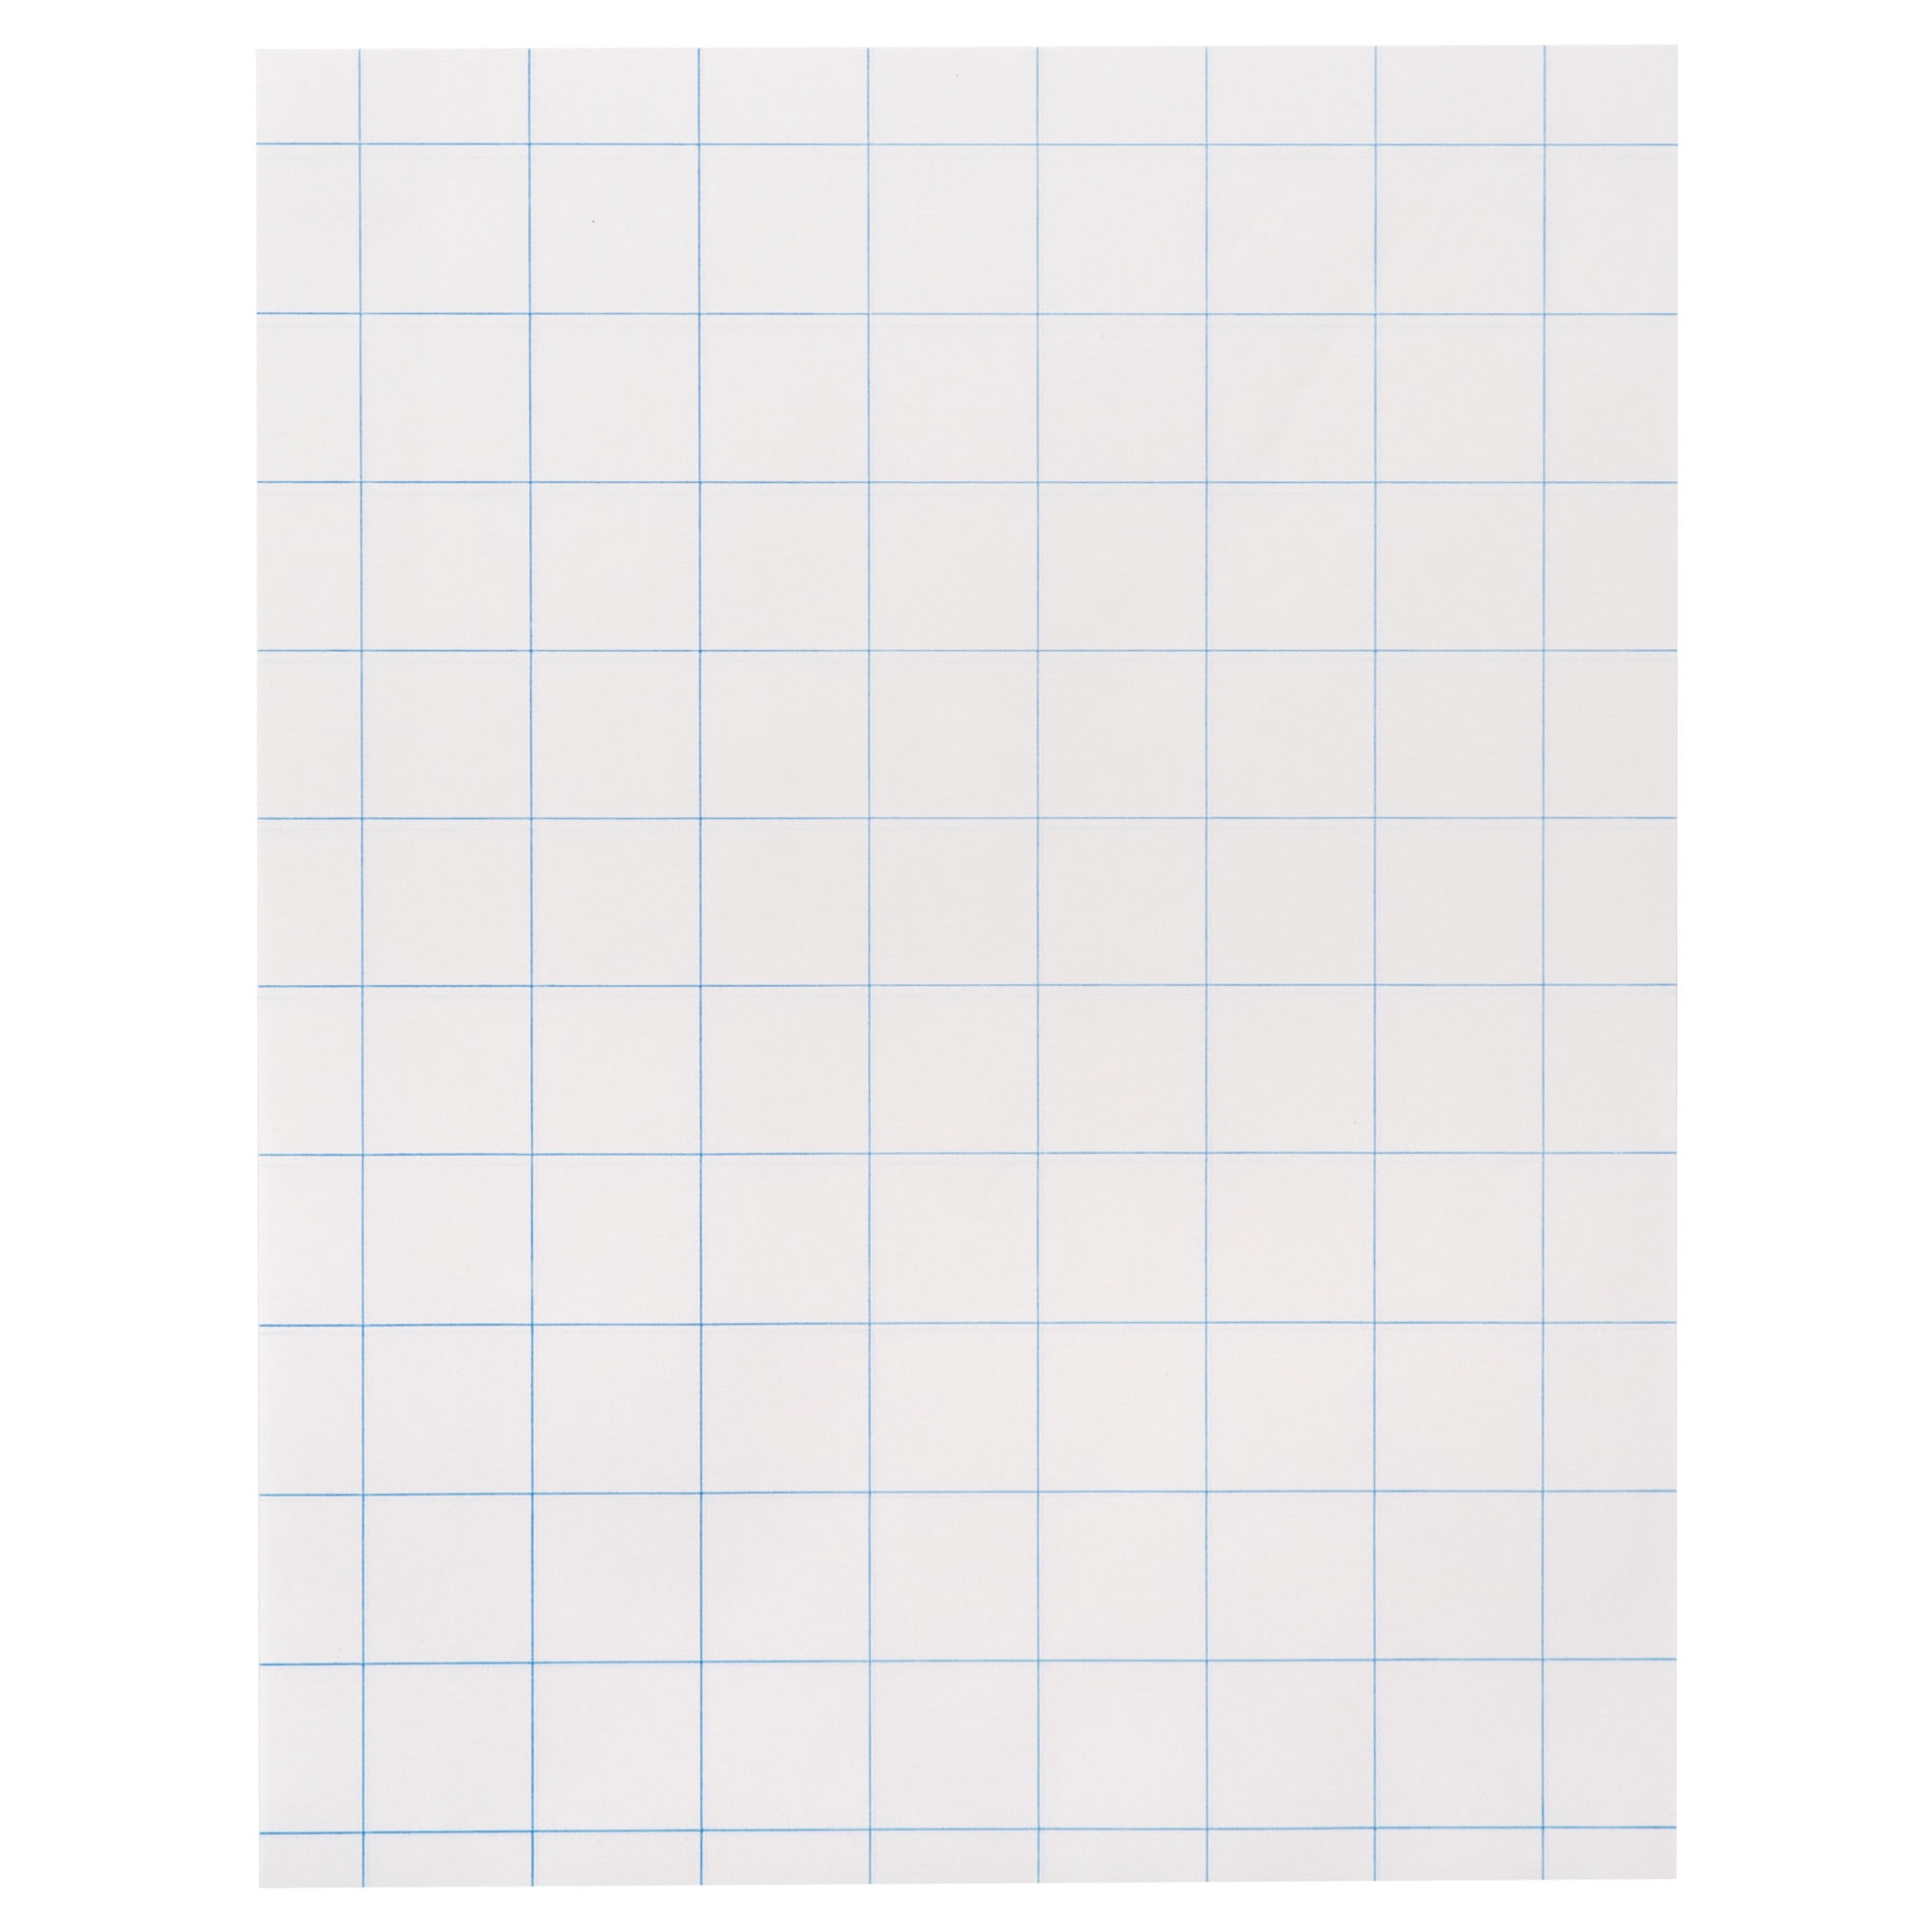 1/8 Inch Dot Paper (A)